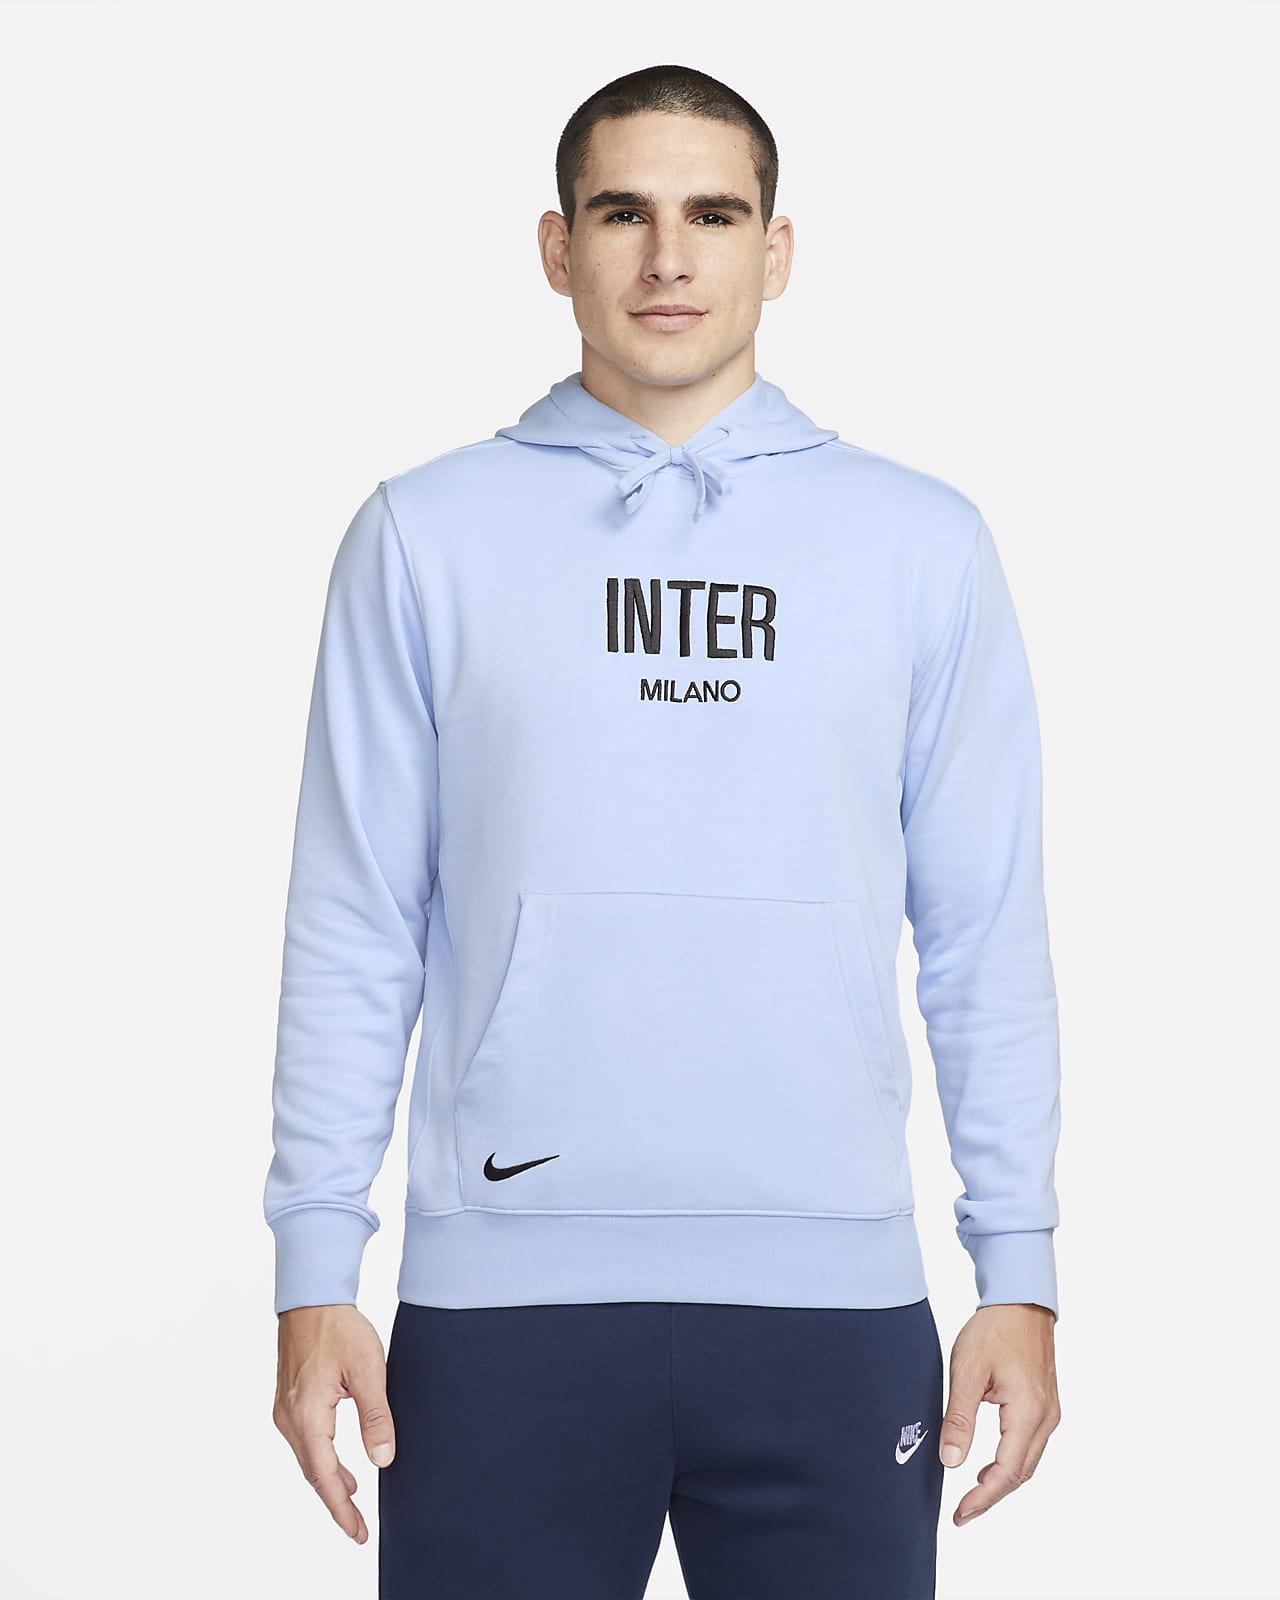 Inter Milan Fleece Men's French Terry Pullover Nike.com